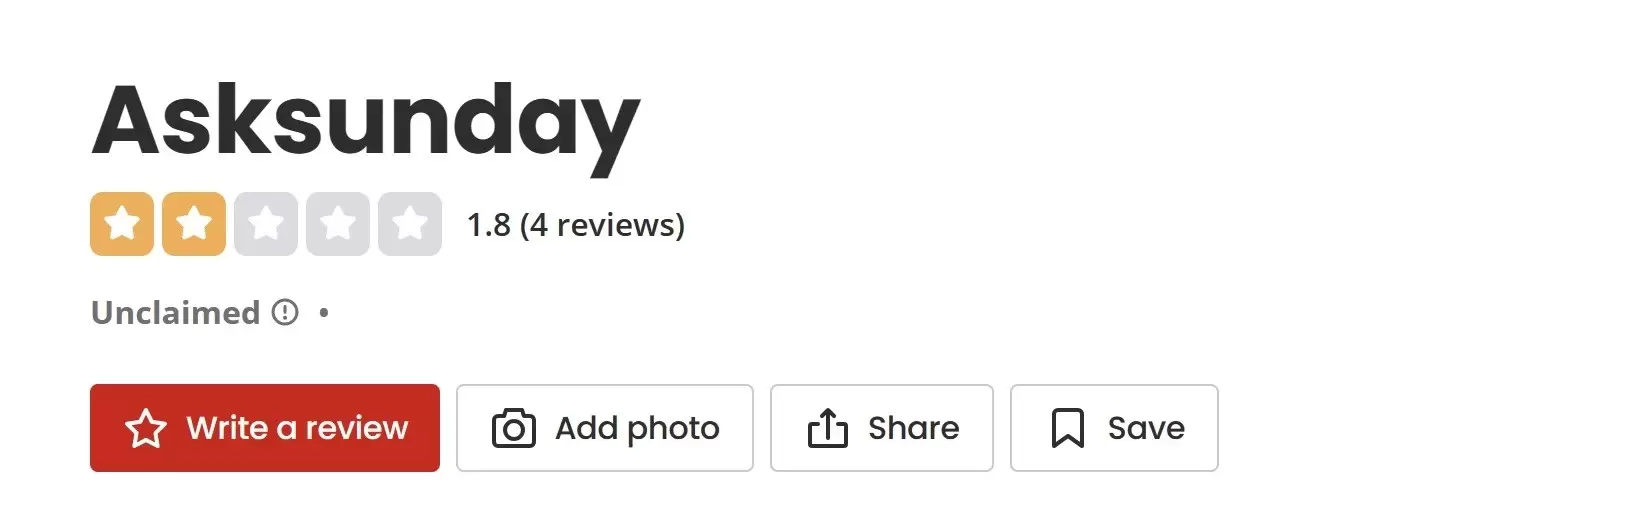 AskSunday.com Yelp reviews